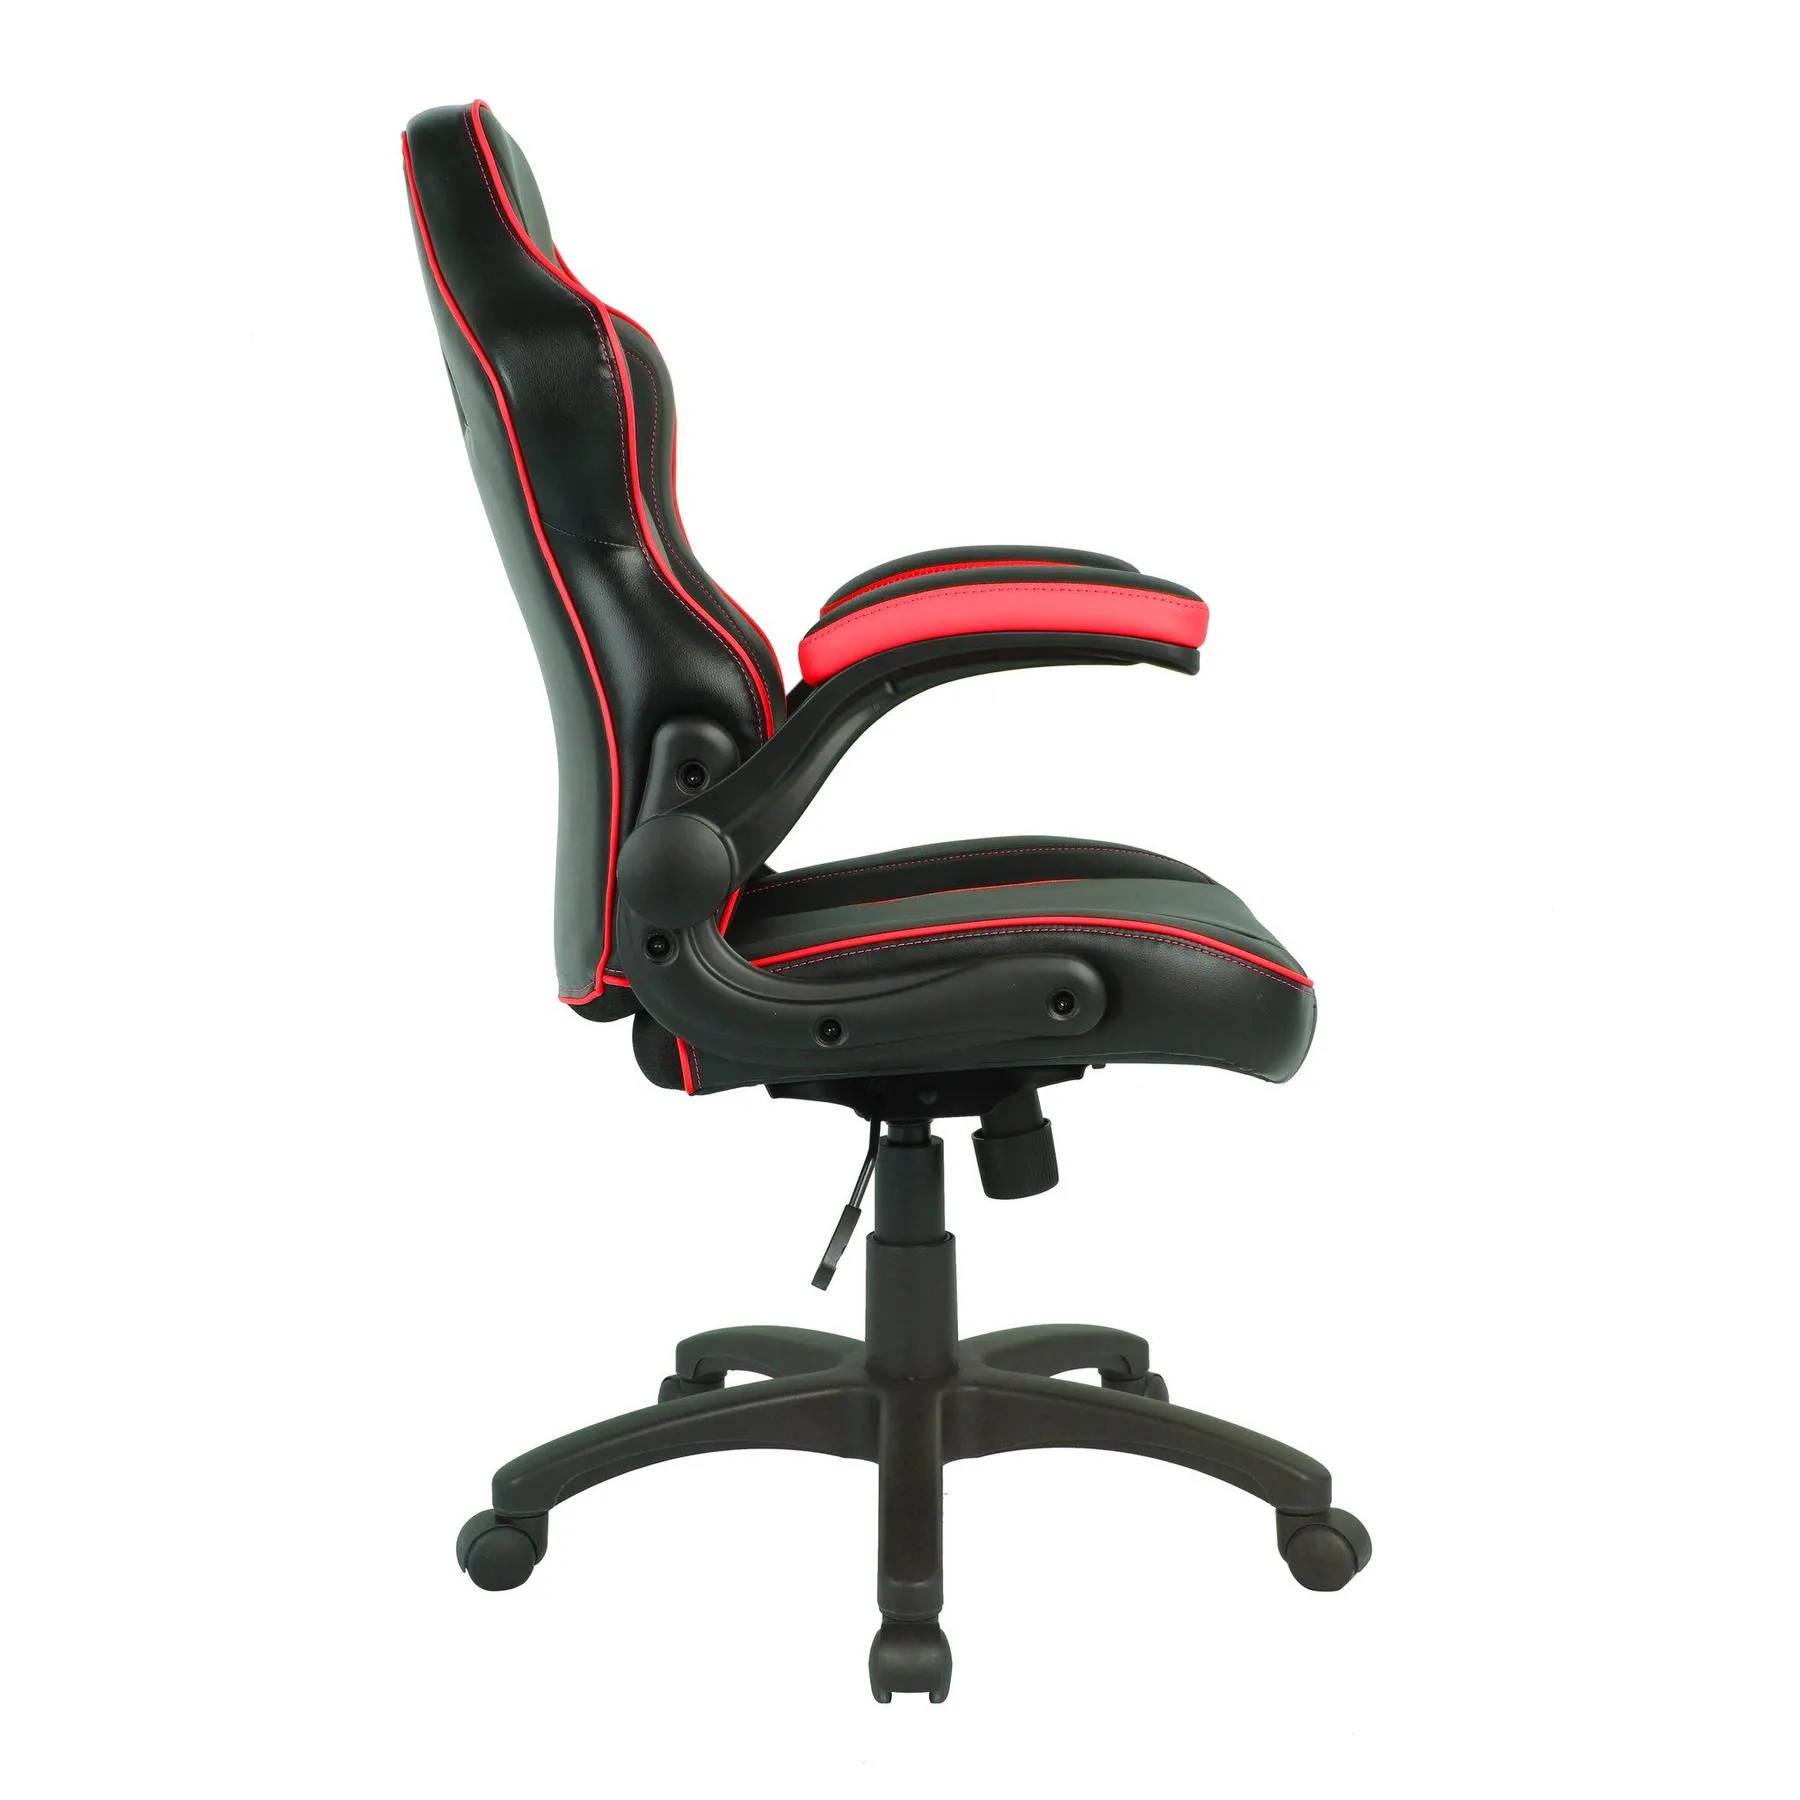 Predator chair red side